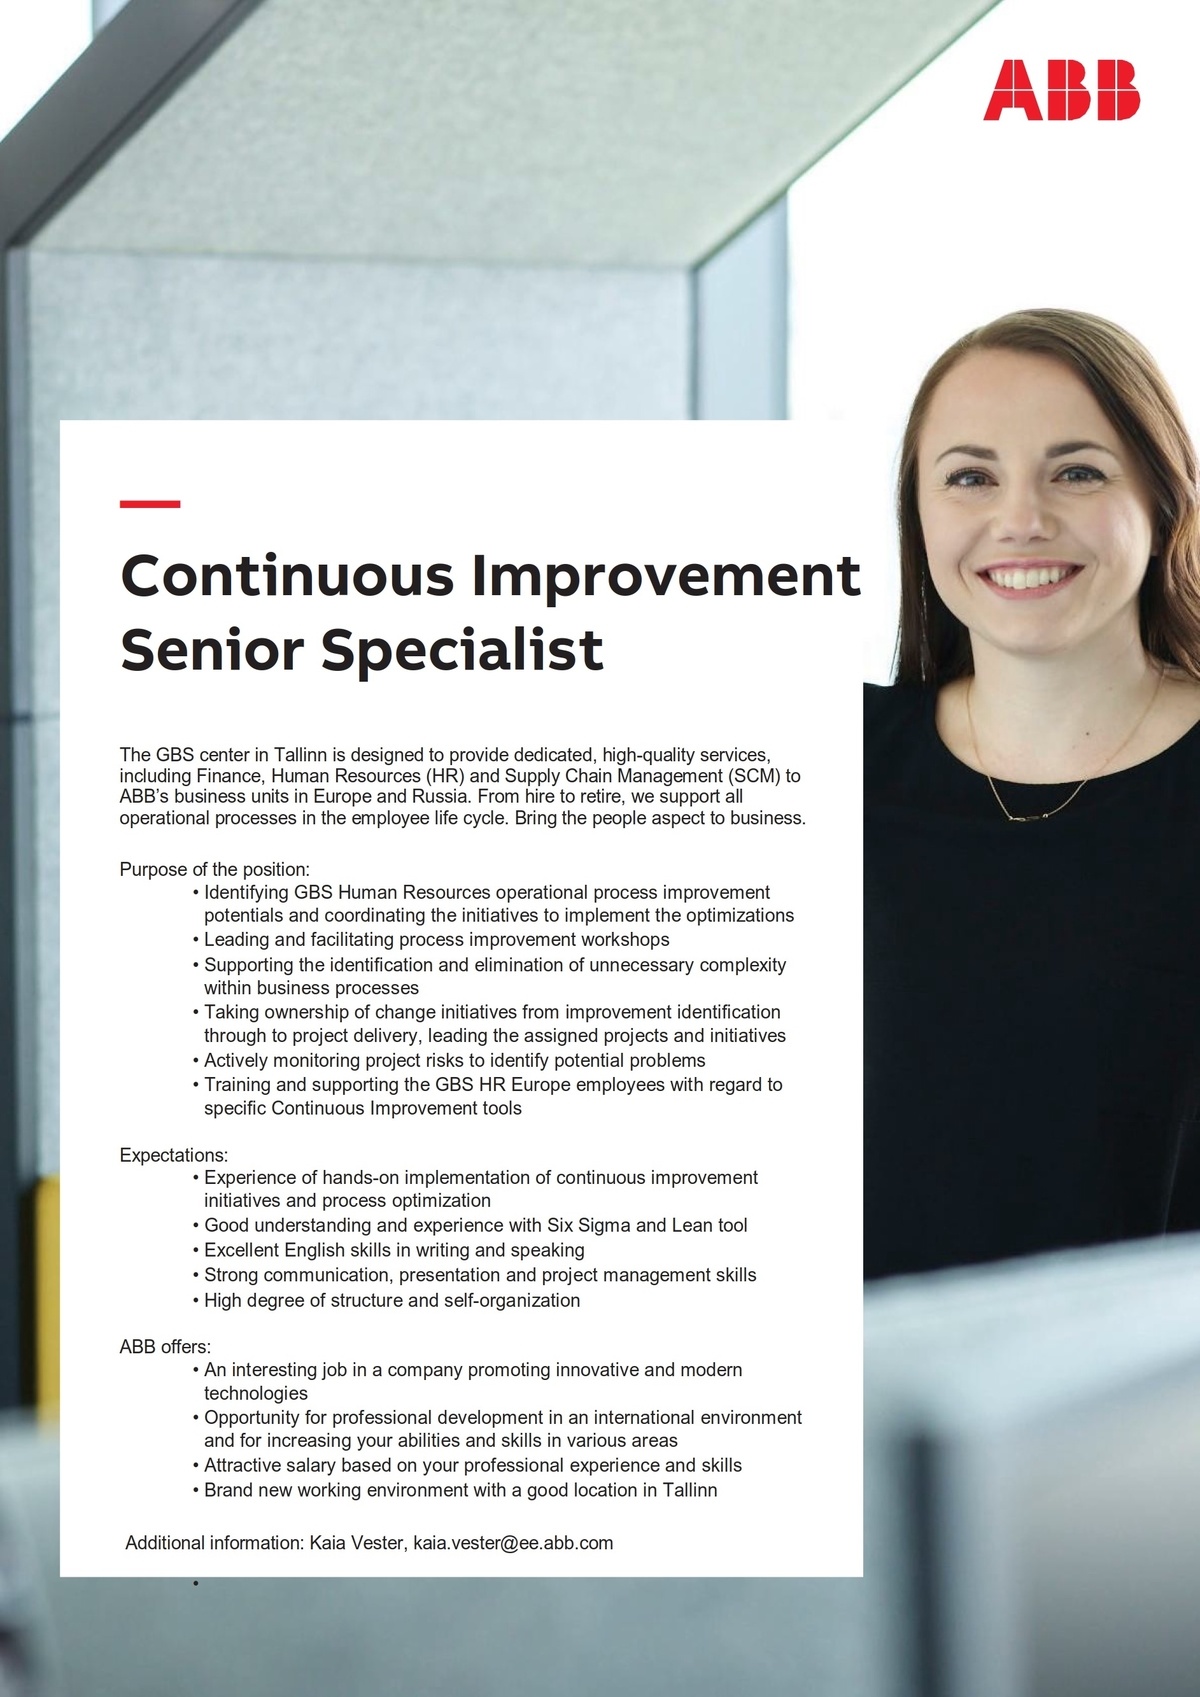 ABB AS Continuous Improvement Senior Specialist